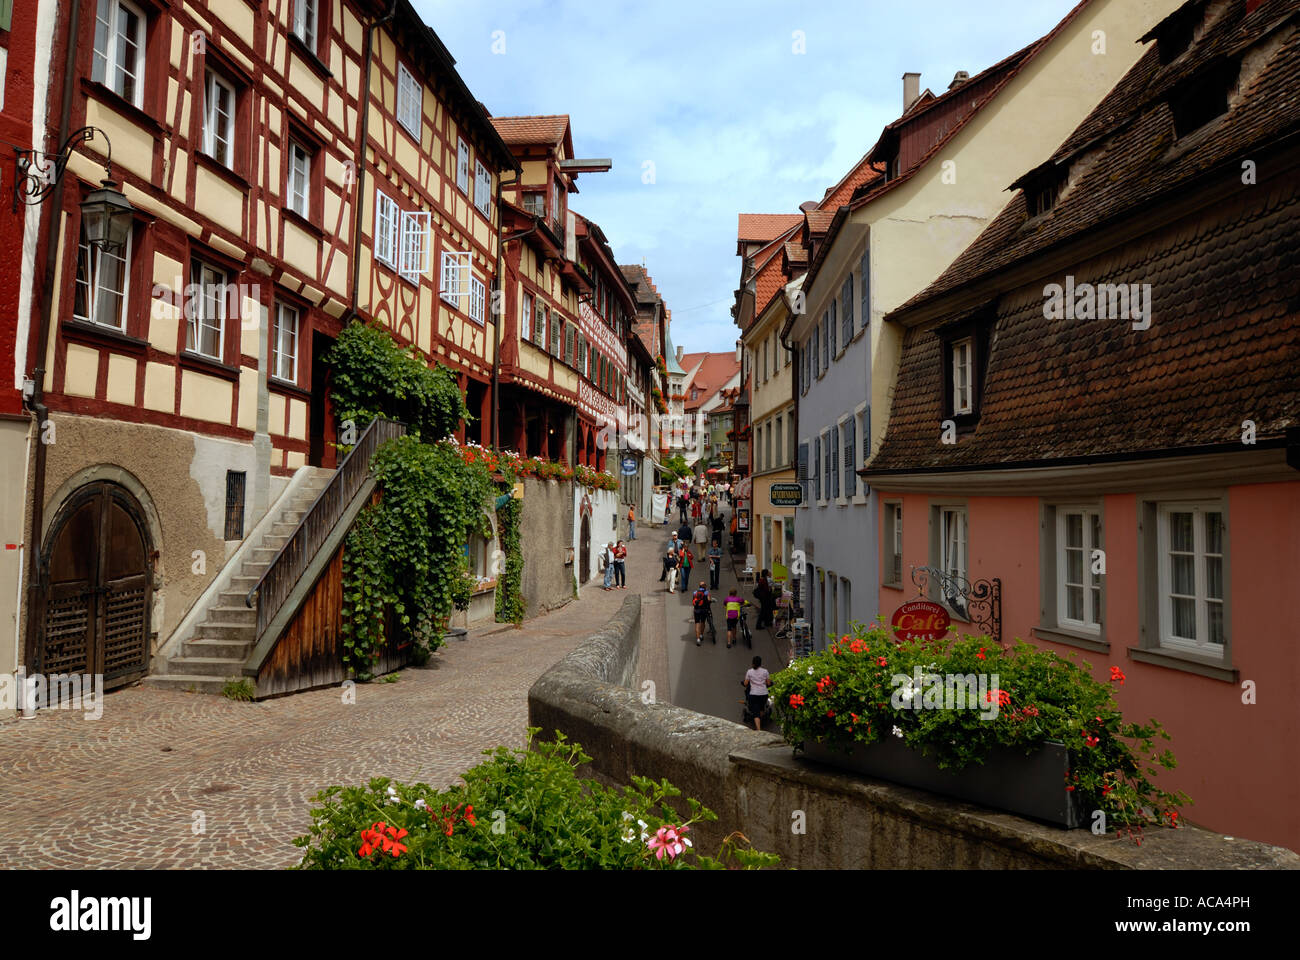 Old part of town, Meersburg, Baden Wuerttemberg, Germany, Europe. Stock Photo